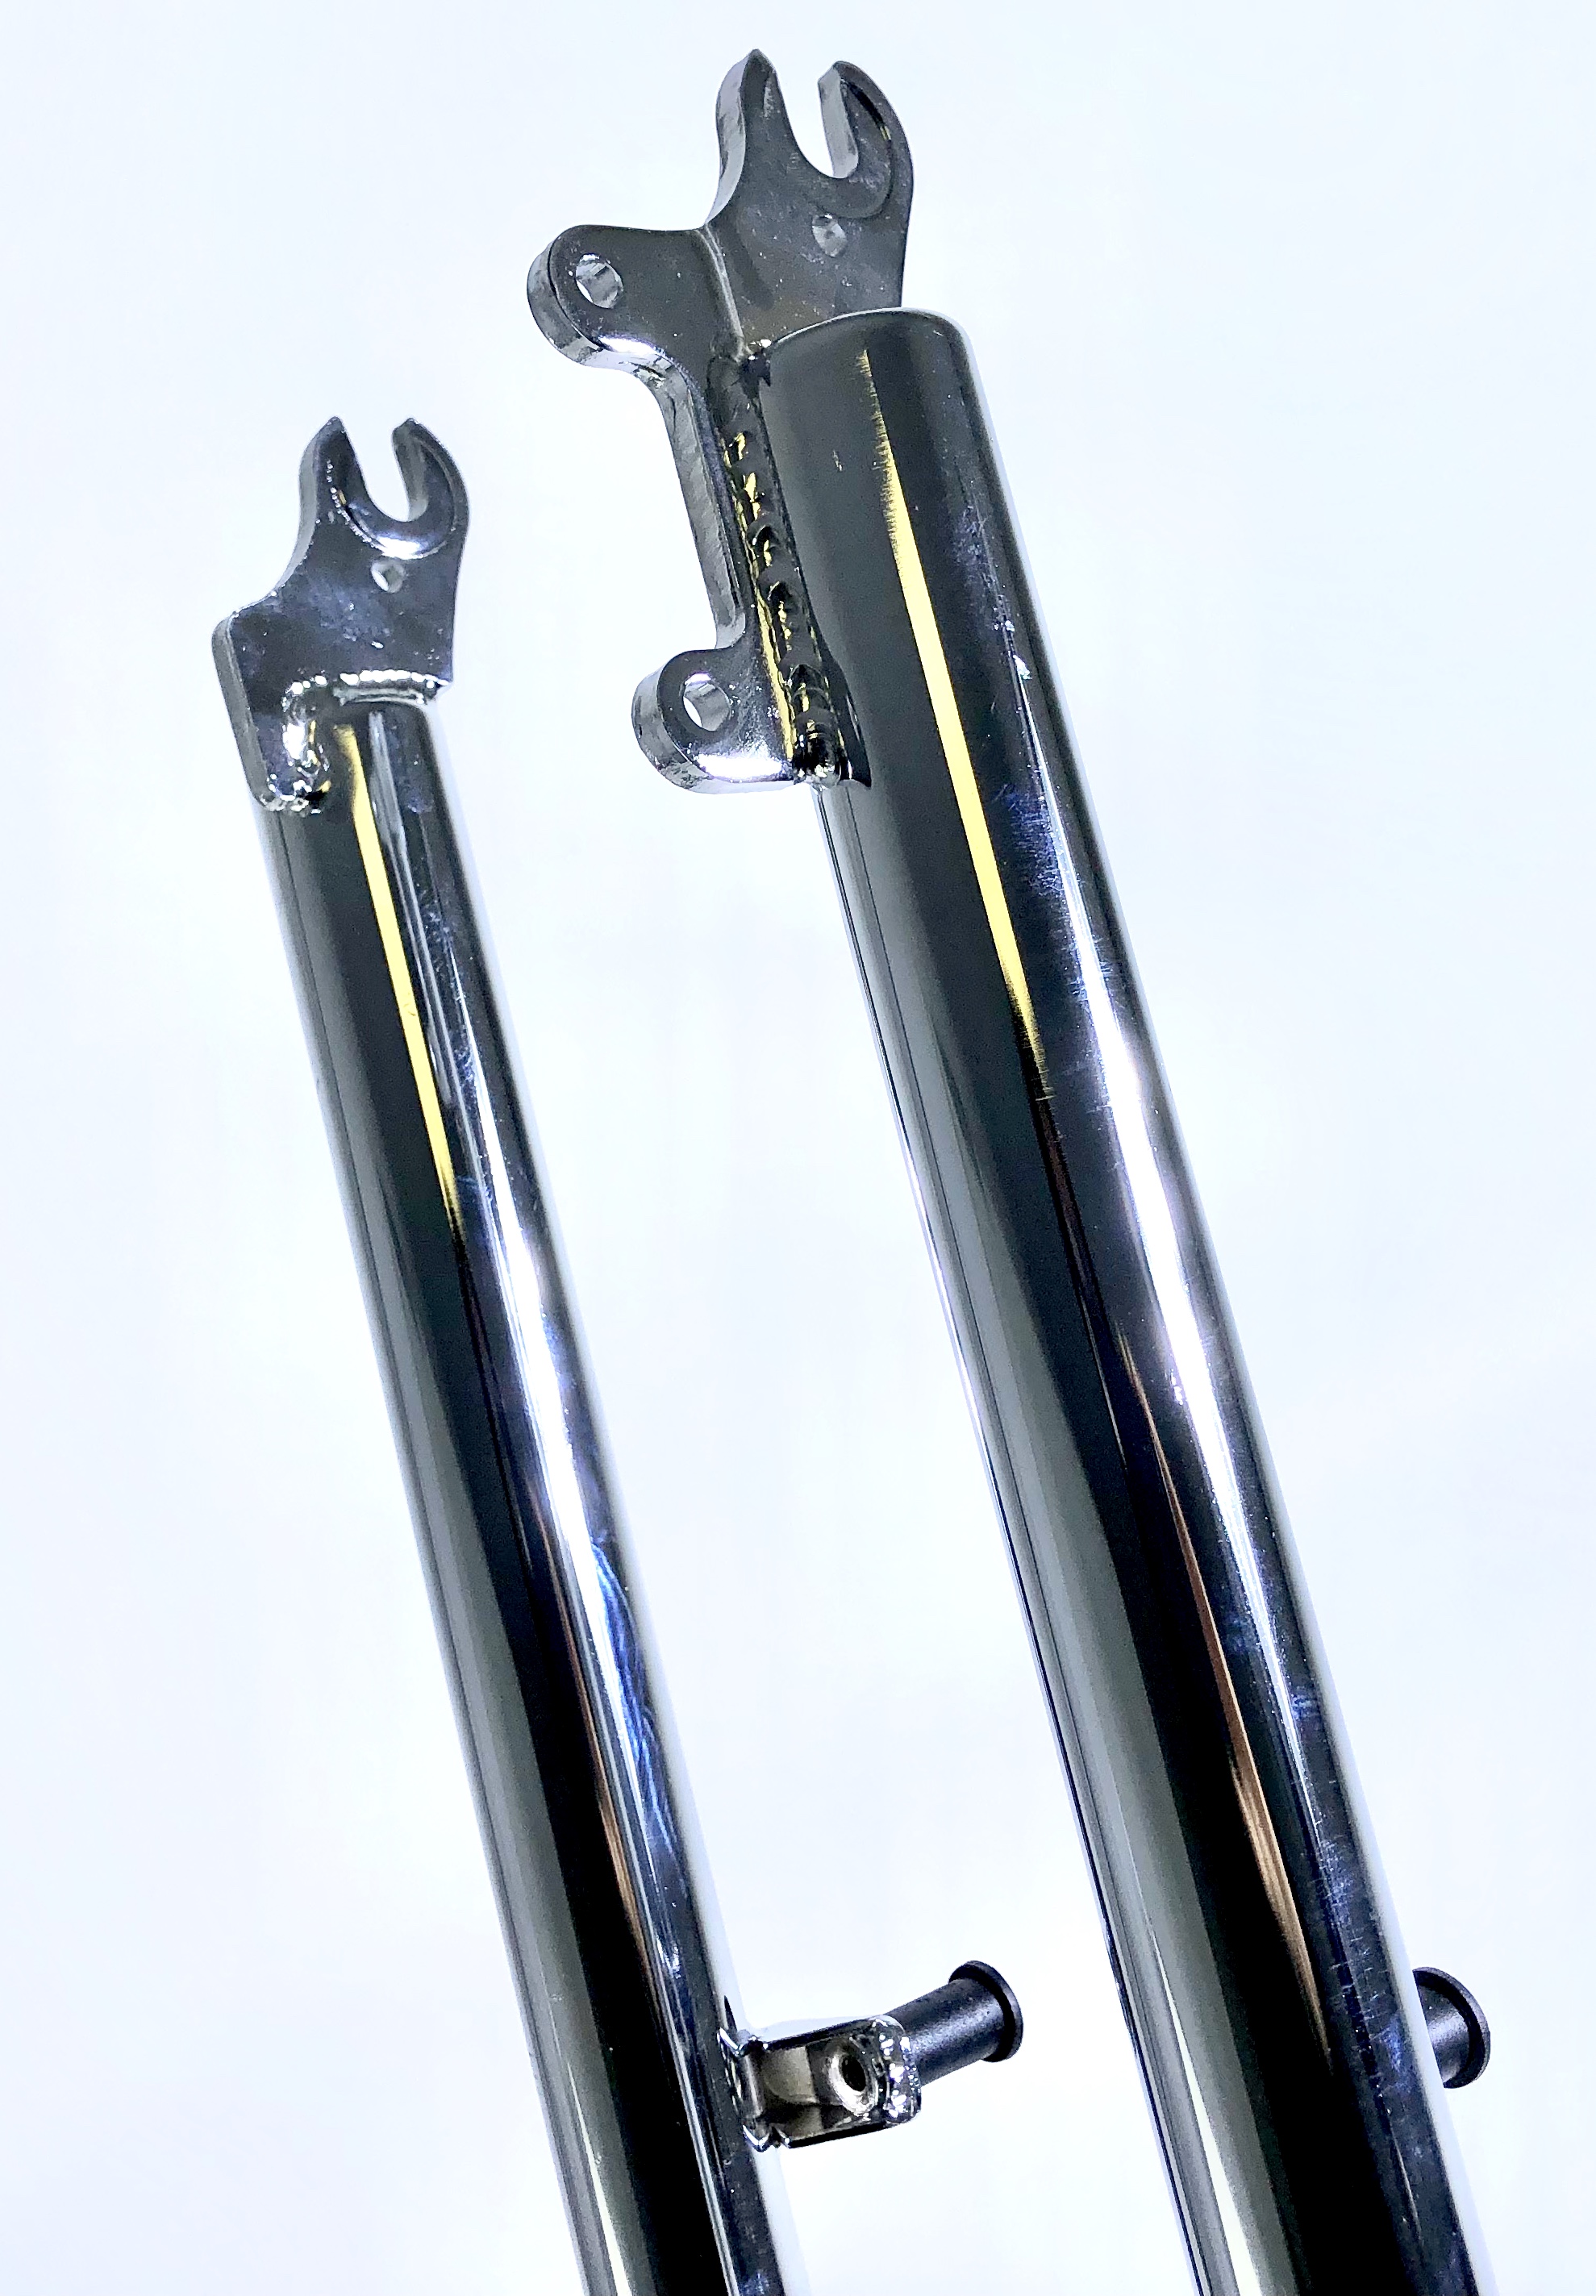 Double Crown Fork 625  1 1/8 steerer chrome plated